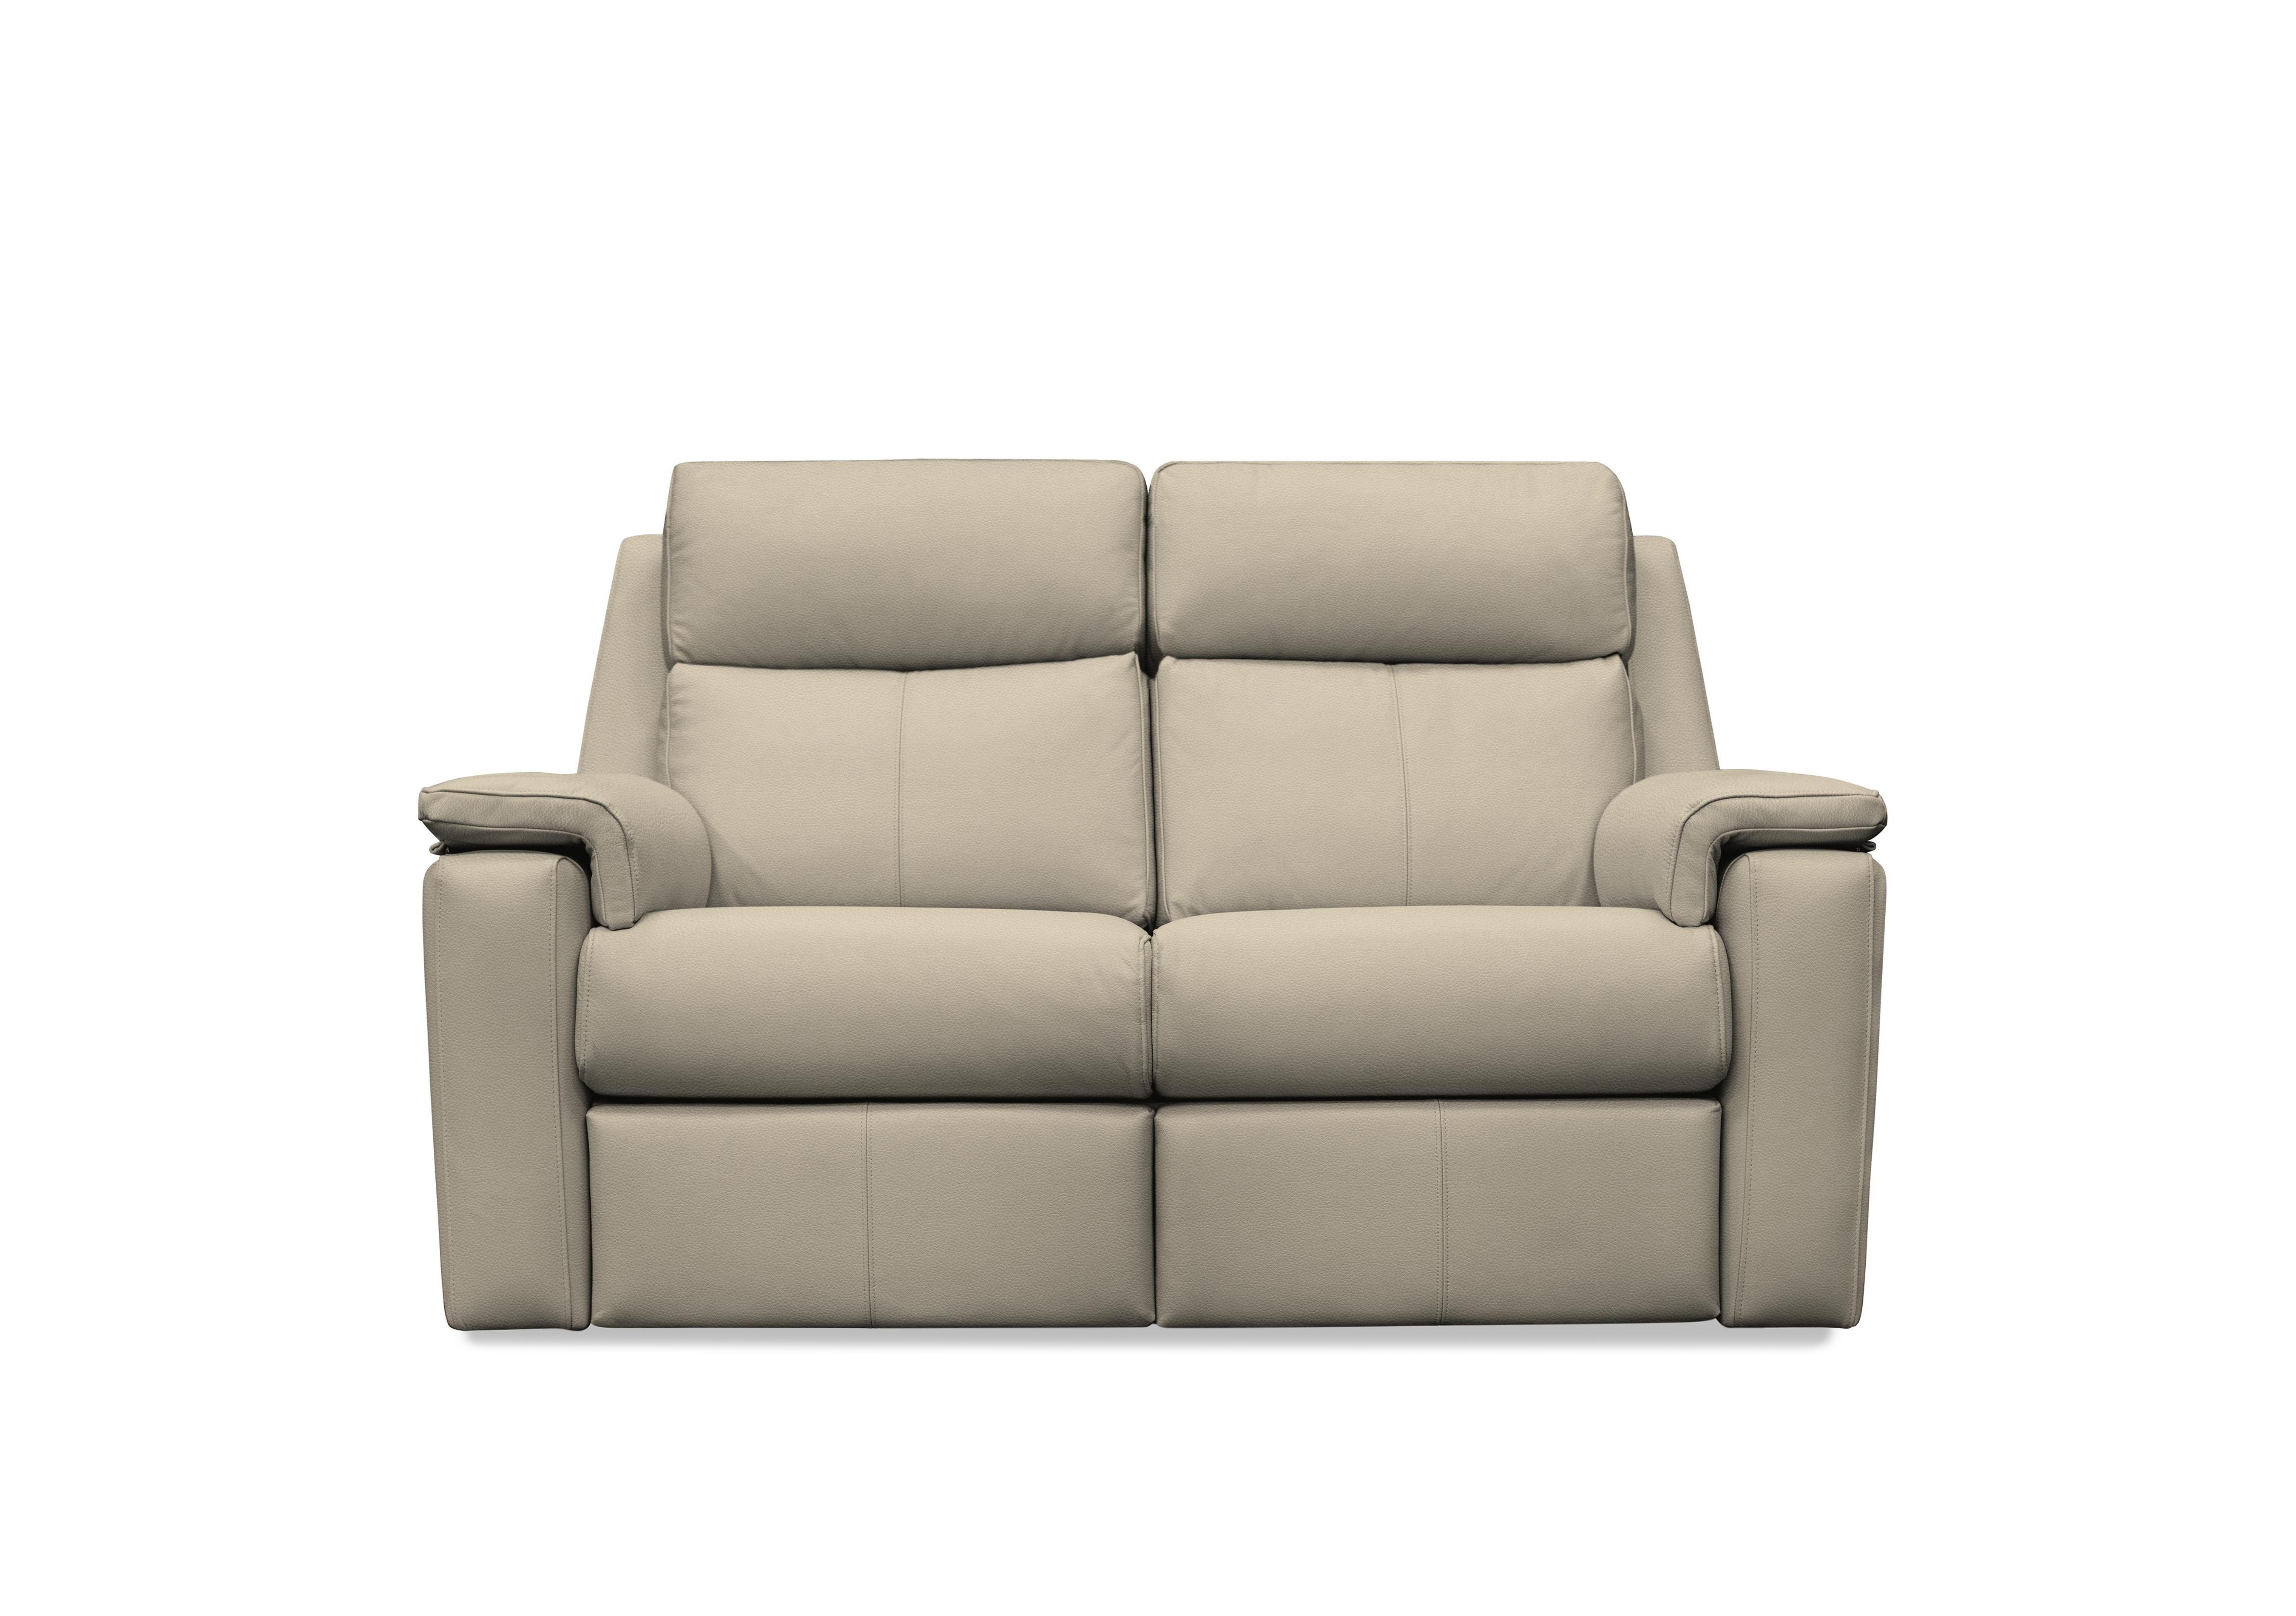 Thornbury 2 Seater Leather Sofa in H001 Oxford Mushroom on Furniture Village